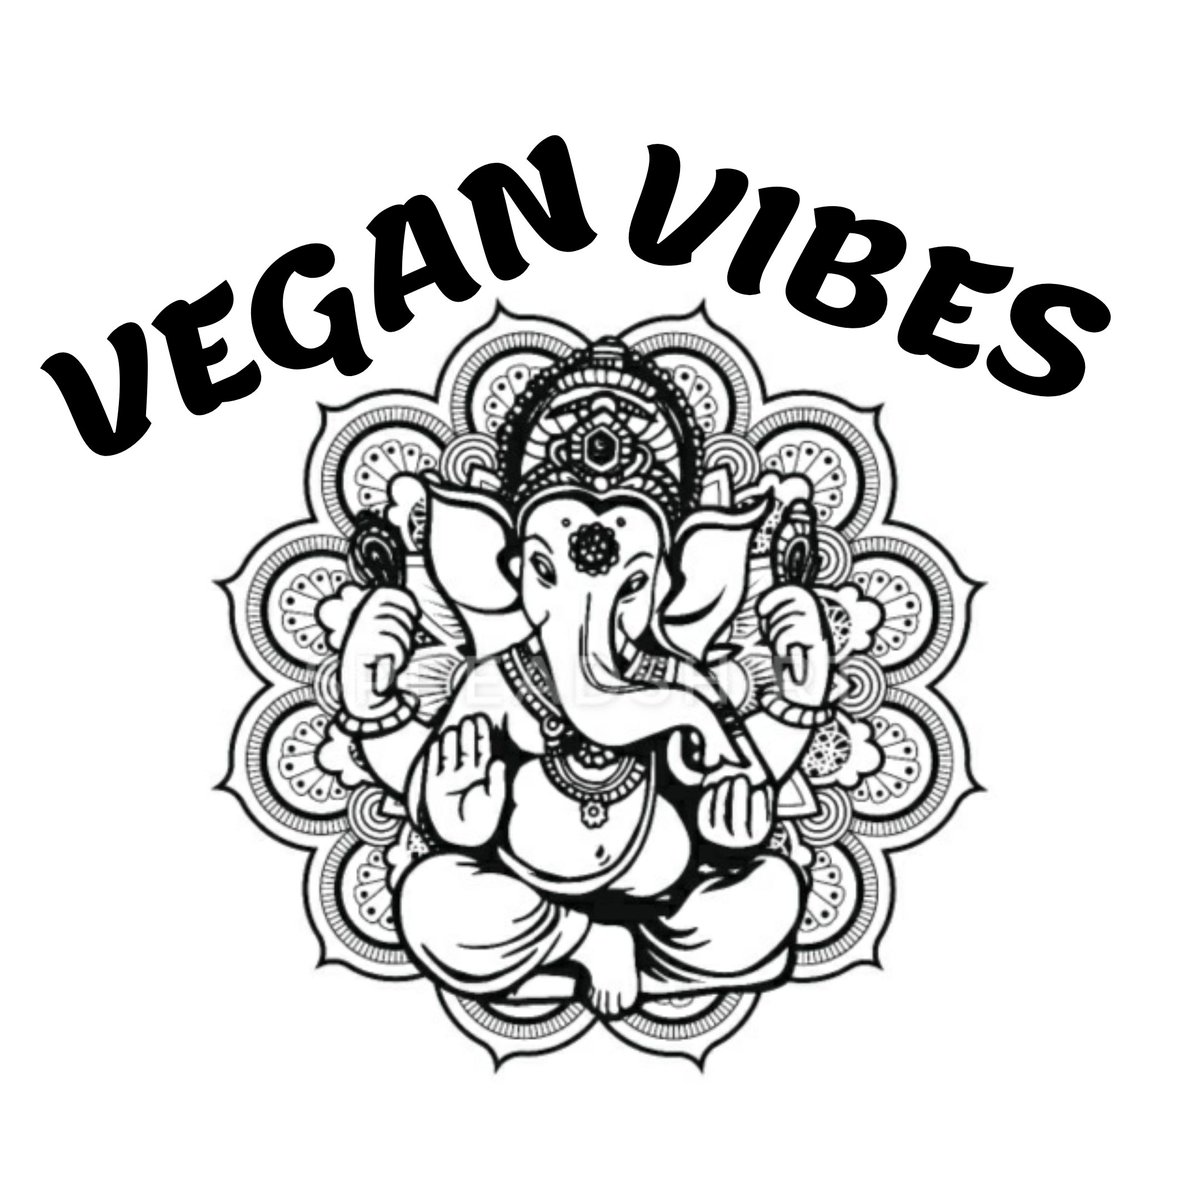 Vegan Vibes for the animals, environment and for my health #Vegan #veganism #veganfood #veganuk #vegans #VeganForTheAnimals #GoVegan #veganlife #veganathlete #veganhealth #health #heatwaveuk #love #AnimalsRights #veganaf #veganvibes #Ganesh #vegangirl #happy #wwfc #uk #vibes #usa